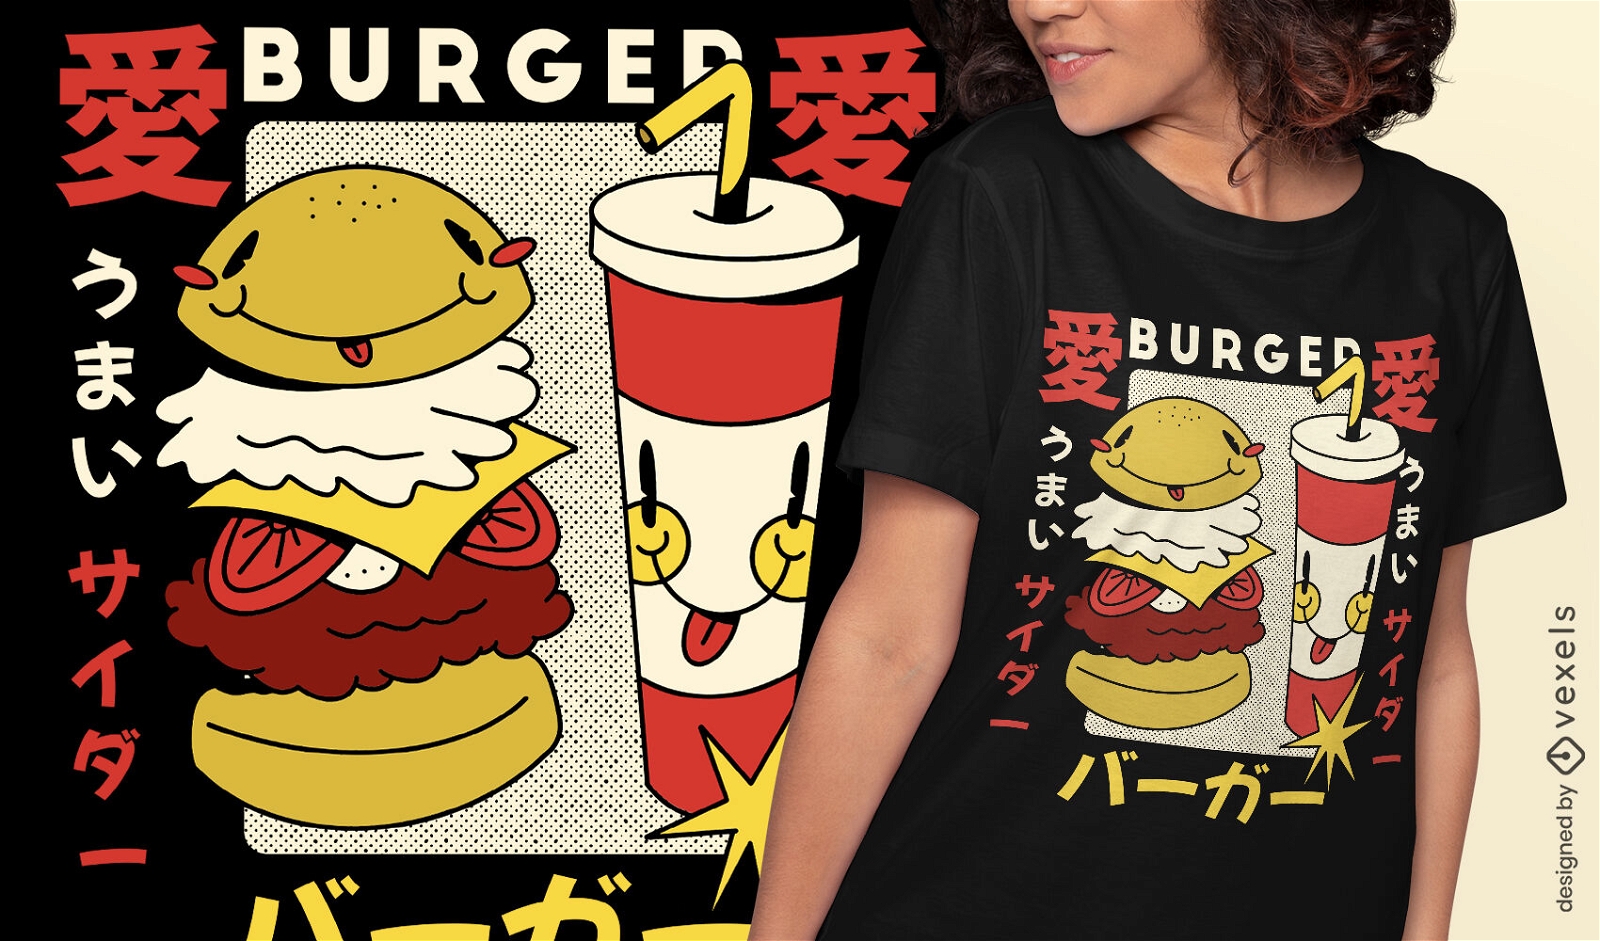 Dise?o de camiseta de dibujos animados retro de soda de hamburguesa